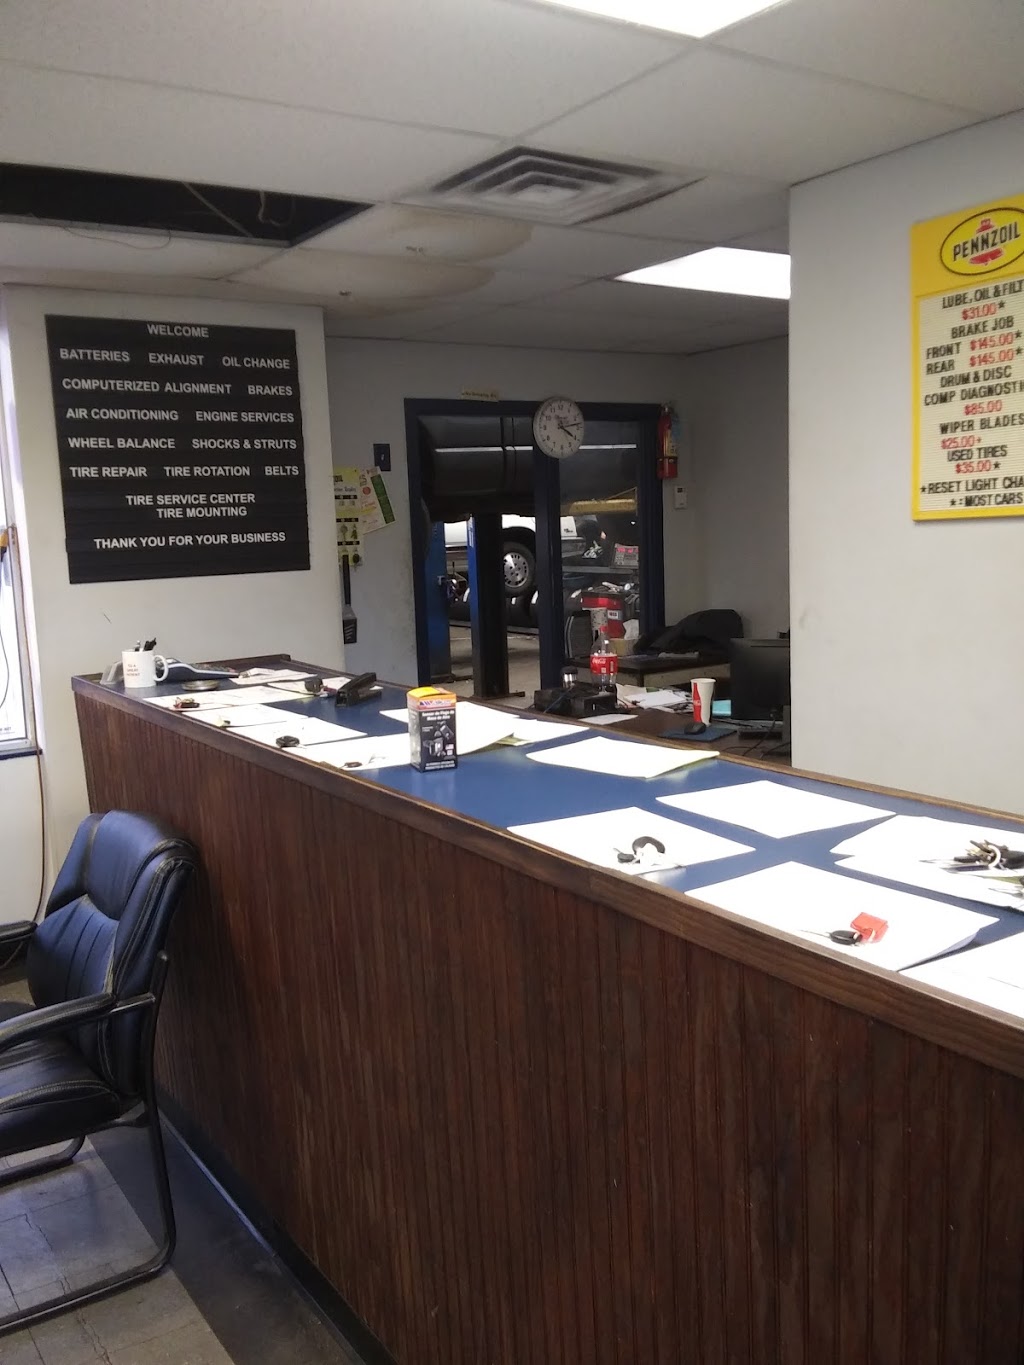 Quality Discount Tire Service Center, Inc. | 3219 Willits Rd, Philadelphia, PA 19114 | Phone: (215) 677-4070